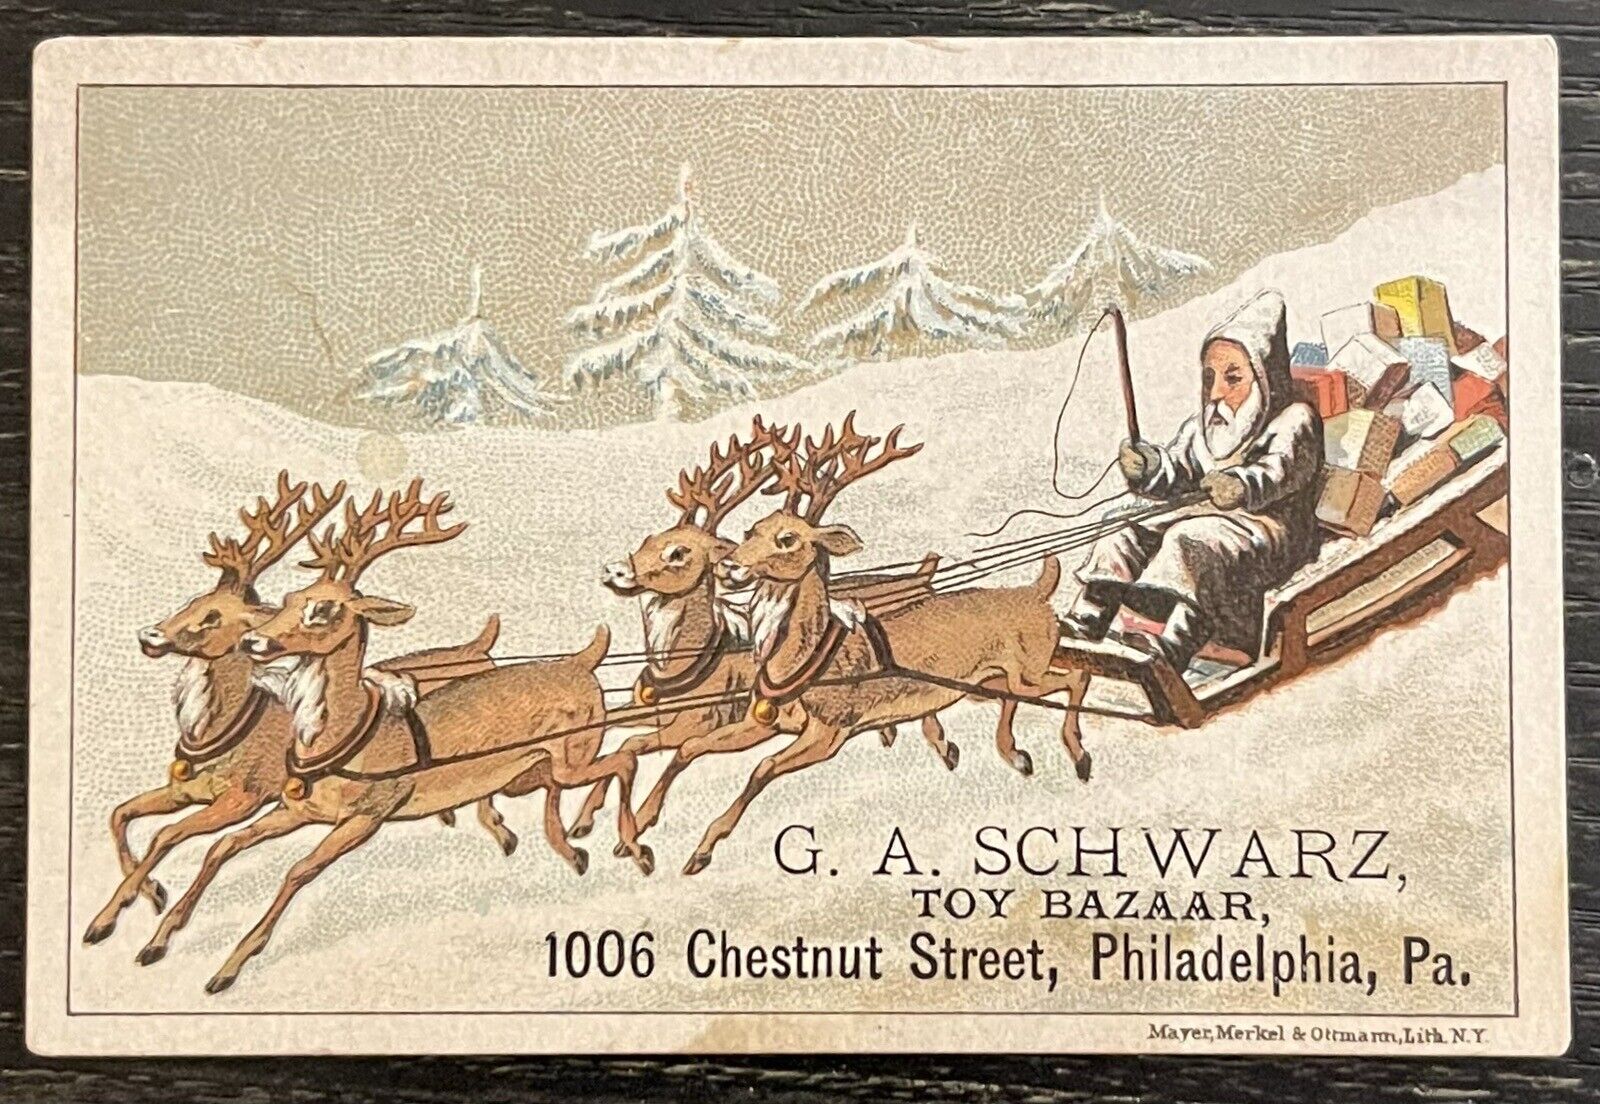 1800’s Brown Santa Claus, FAO SCHWARZ’s Philadelphia Store (G. A. Schwarz)